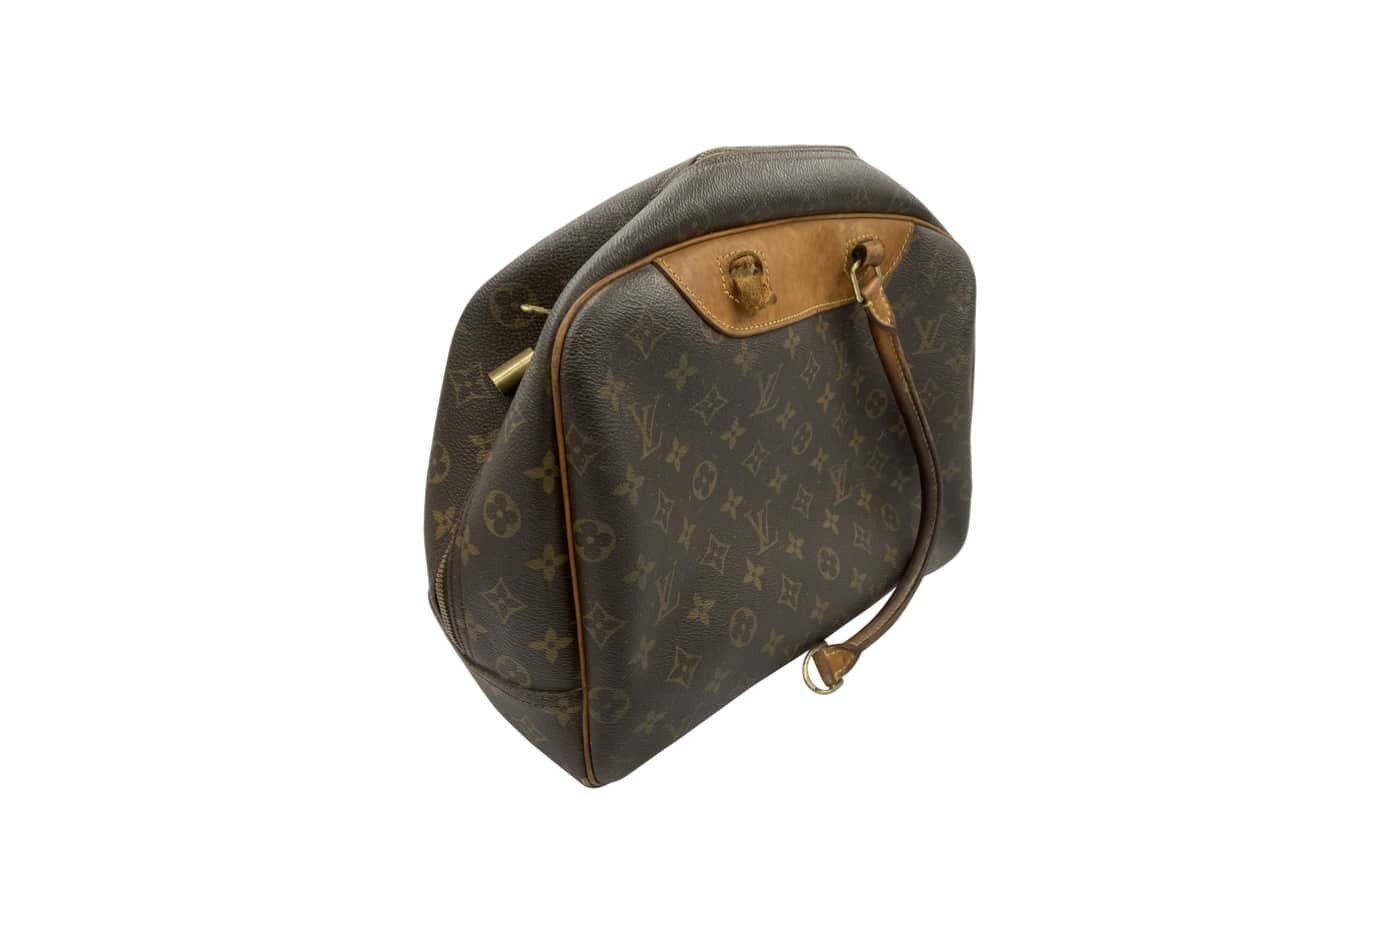 Louis Vuitton Handbag Tear Repair — SoleHeeled